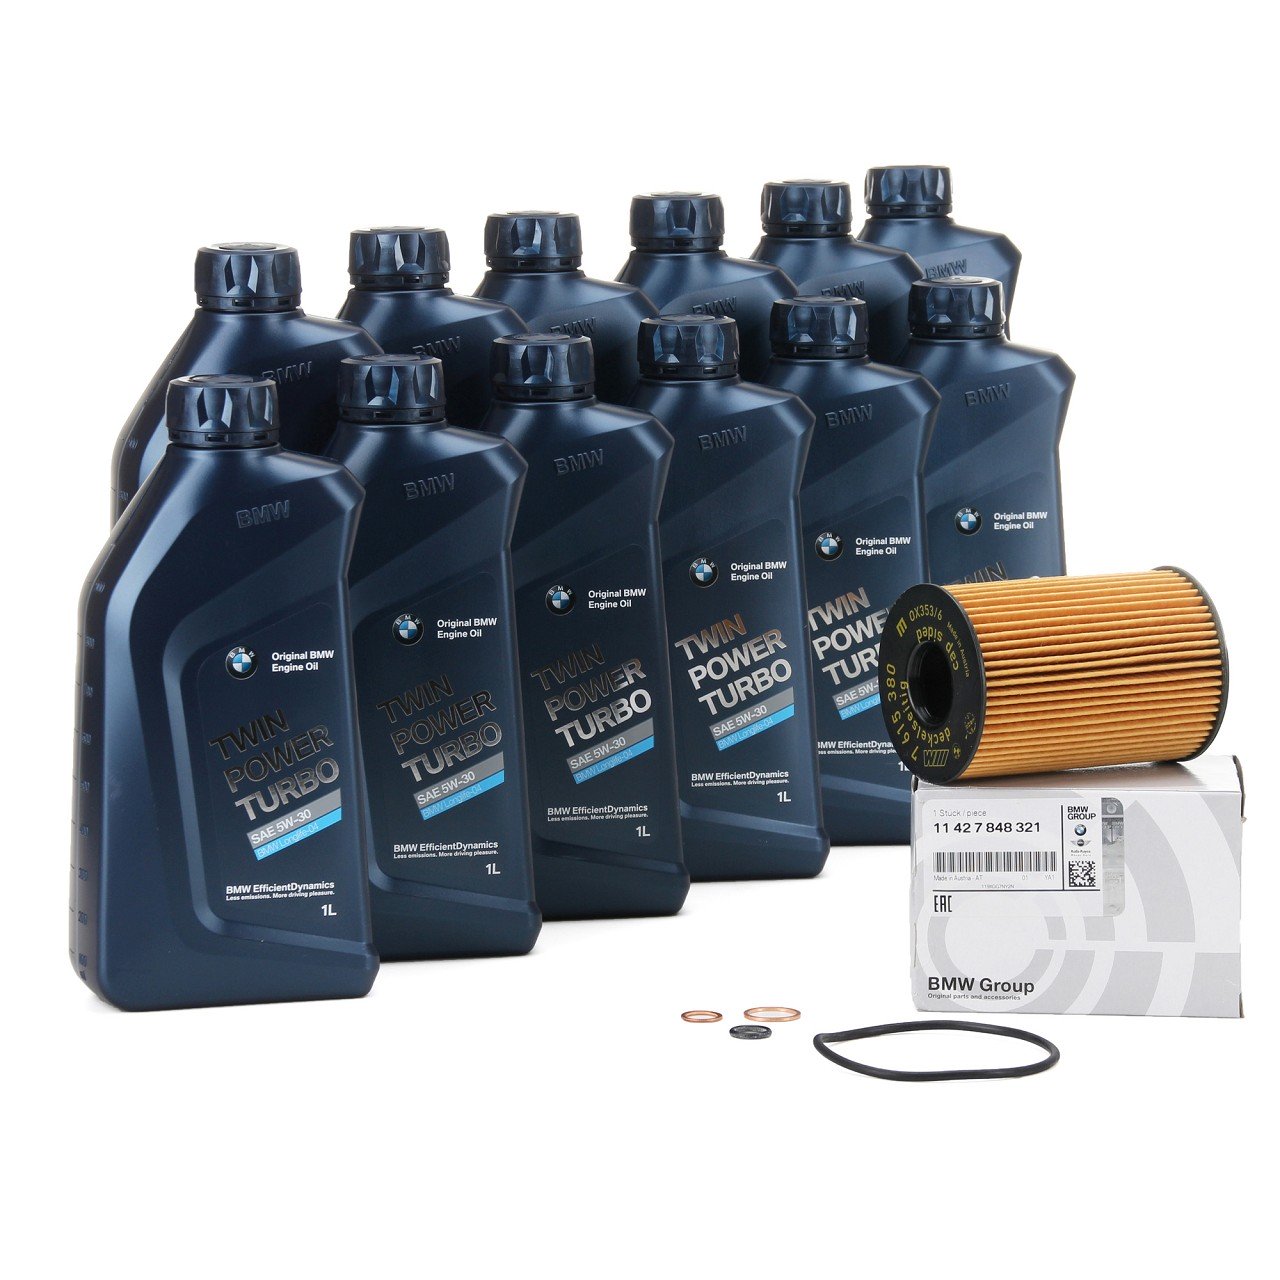 12L 12 Liter ORIGINAL BMW Motoröl Öl 5W30 LongLife-04 + Ölfilter 11427848321